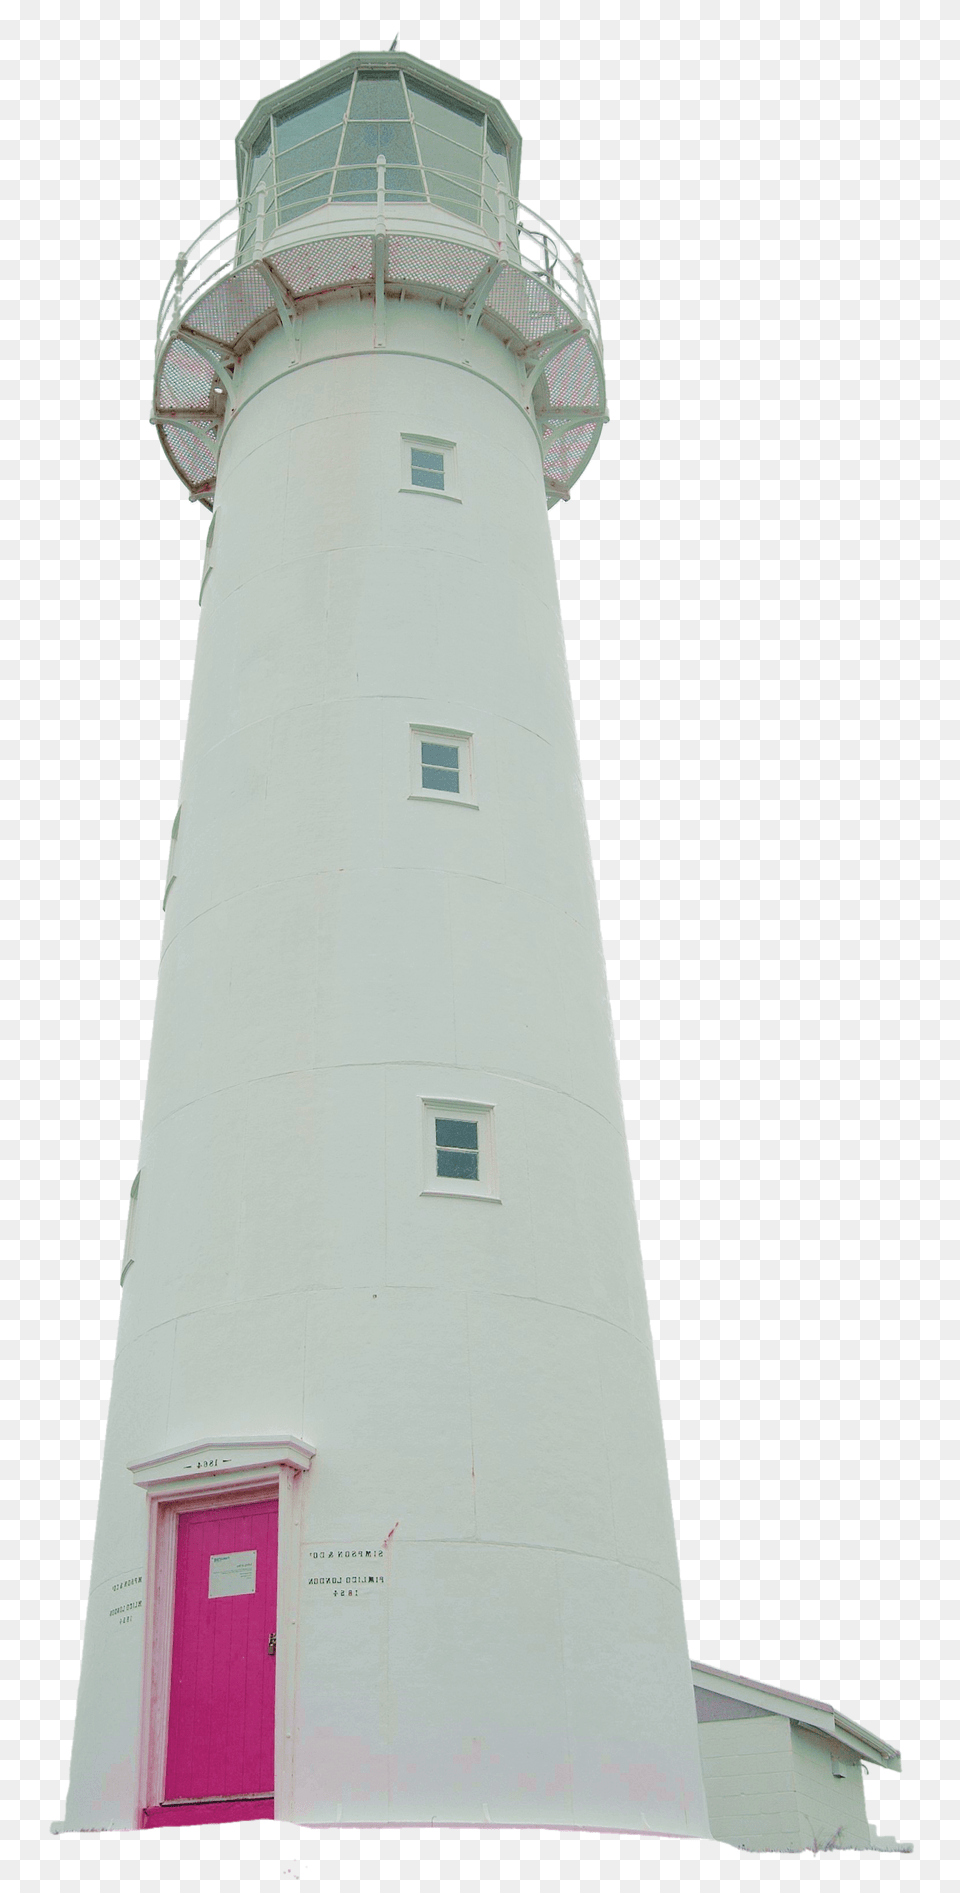 Pngpix Com Lighthouse Transparent, Architecture, Beacon, Building, Tower Png Image